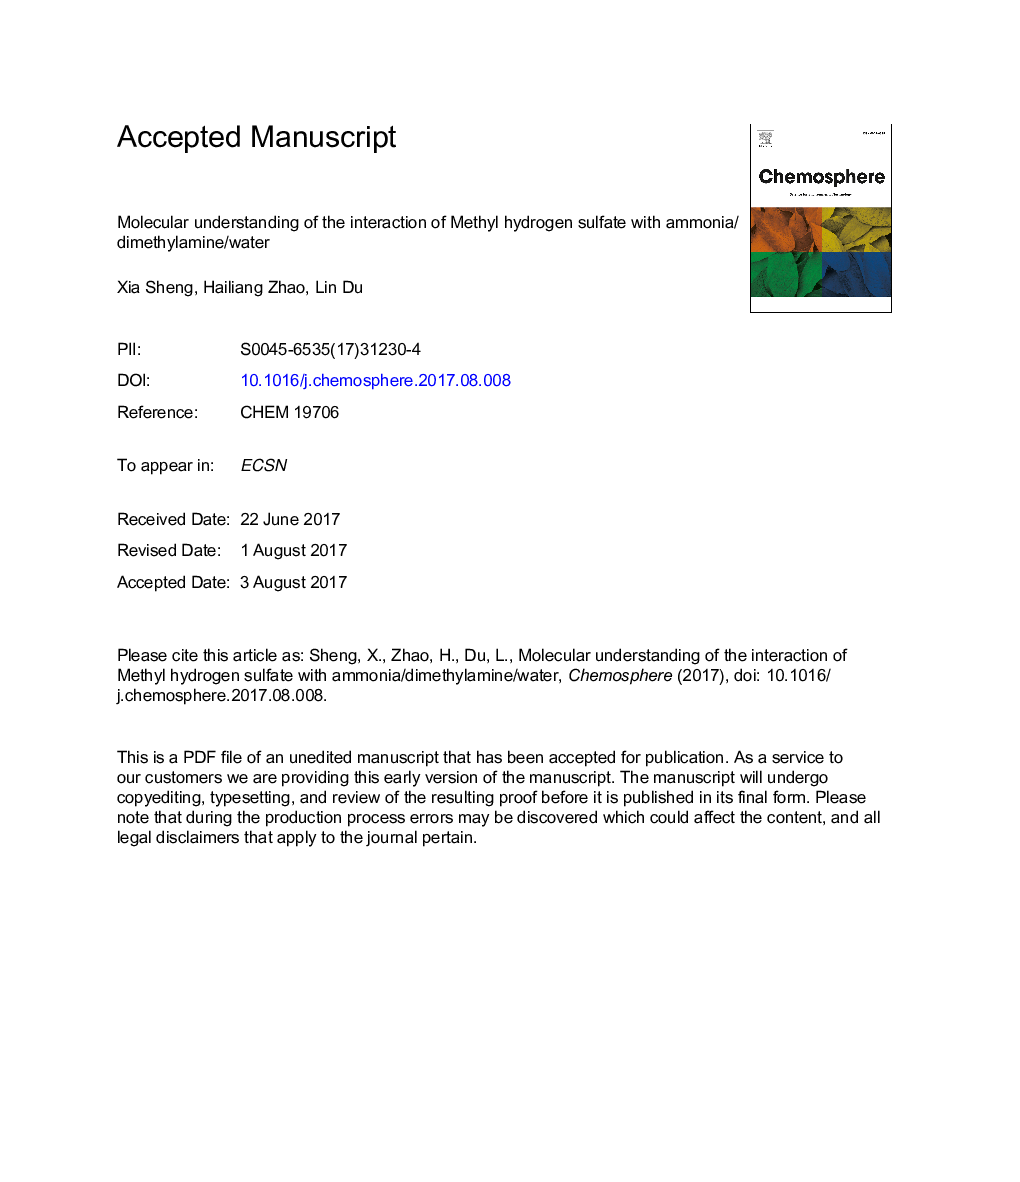 Molecular understanding of the interaction of methyl hydrogen sulfate with ammonia/dimethylamine/water